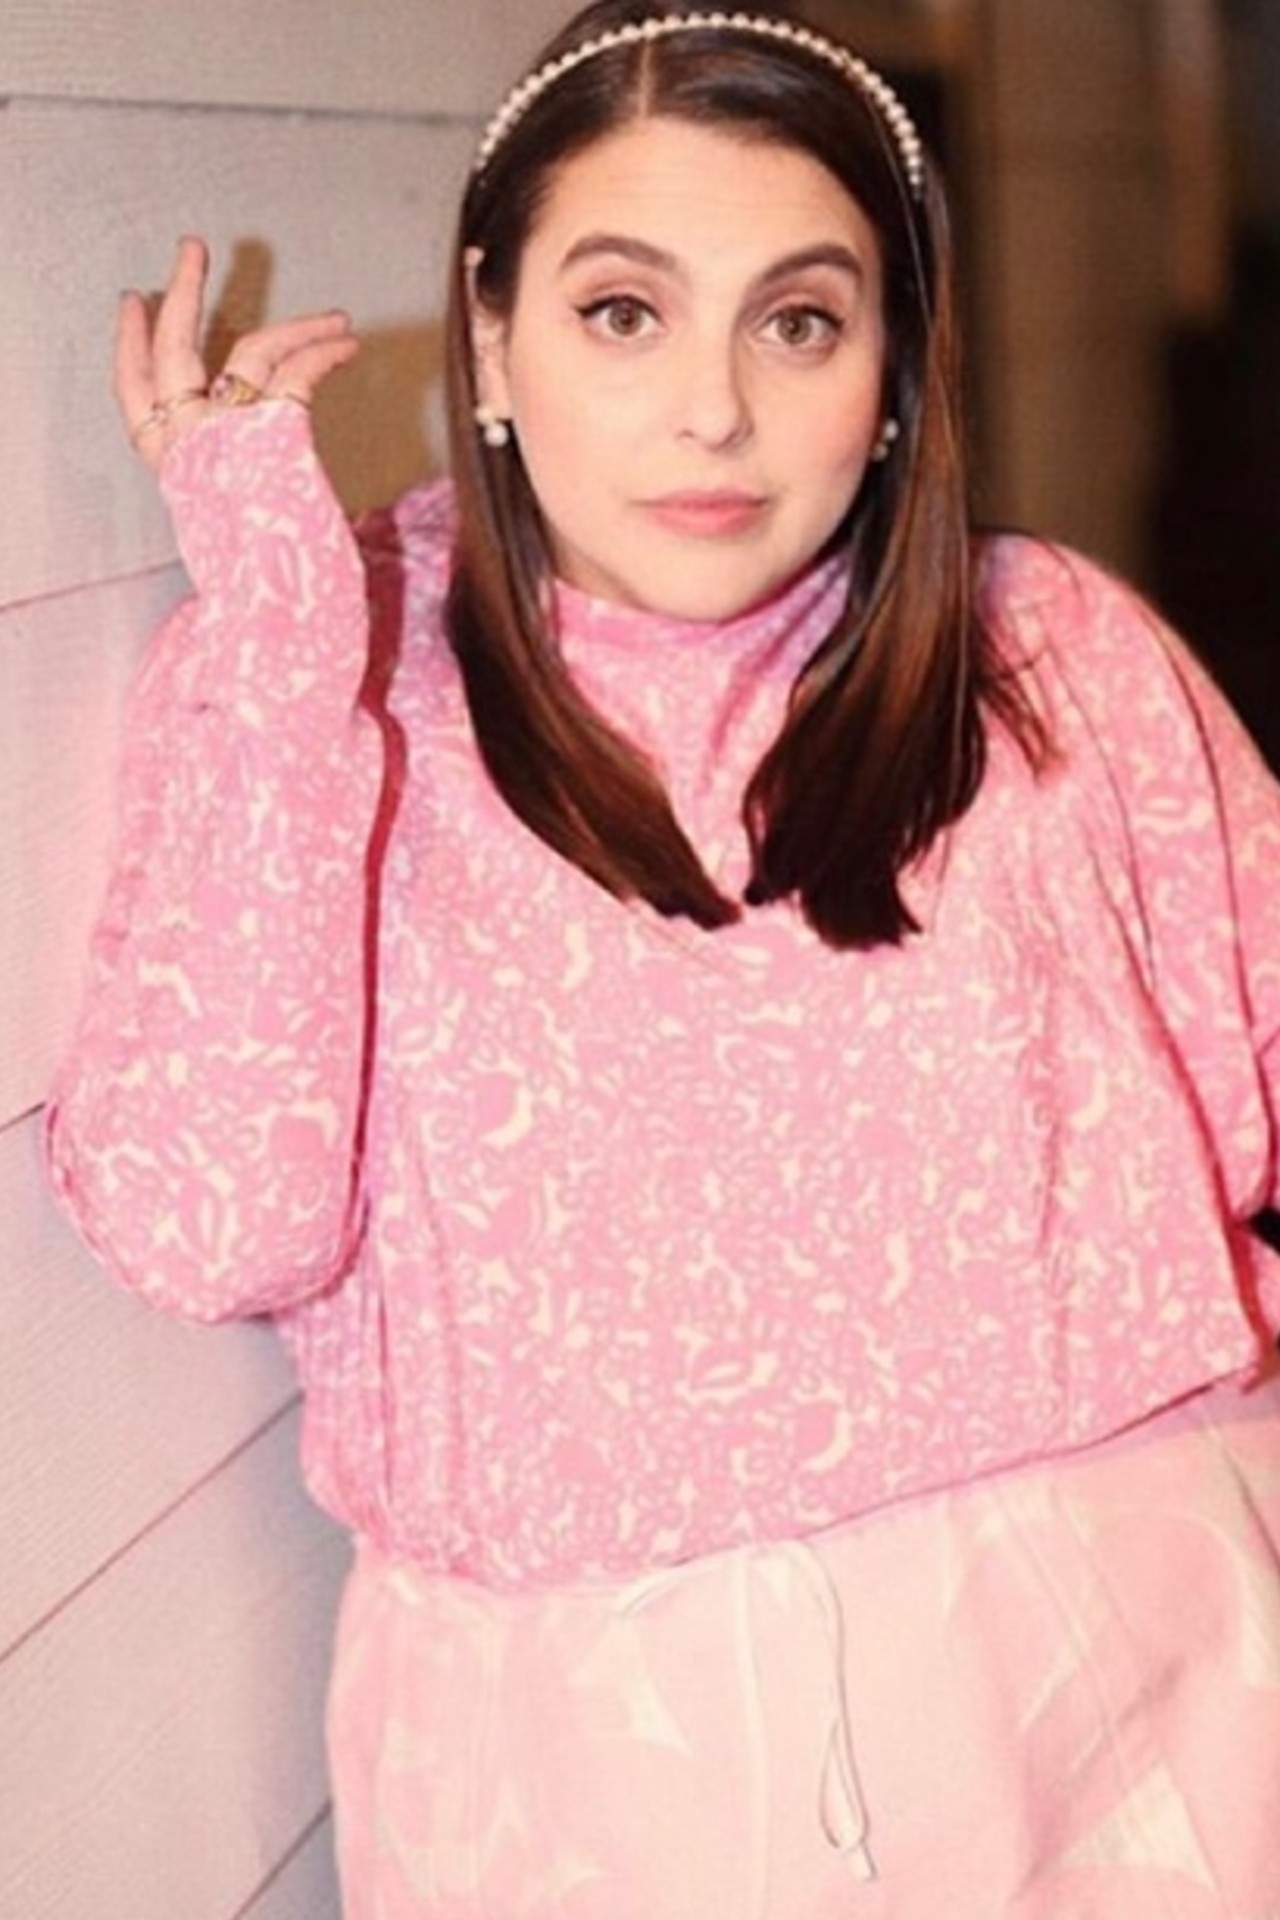 Beanie Feldstein in a pink outfit